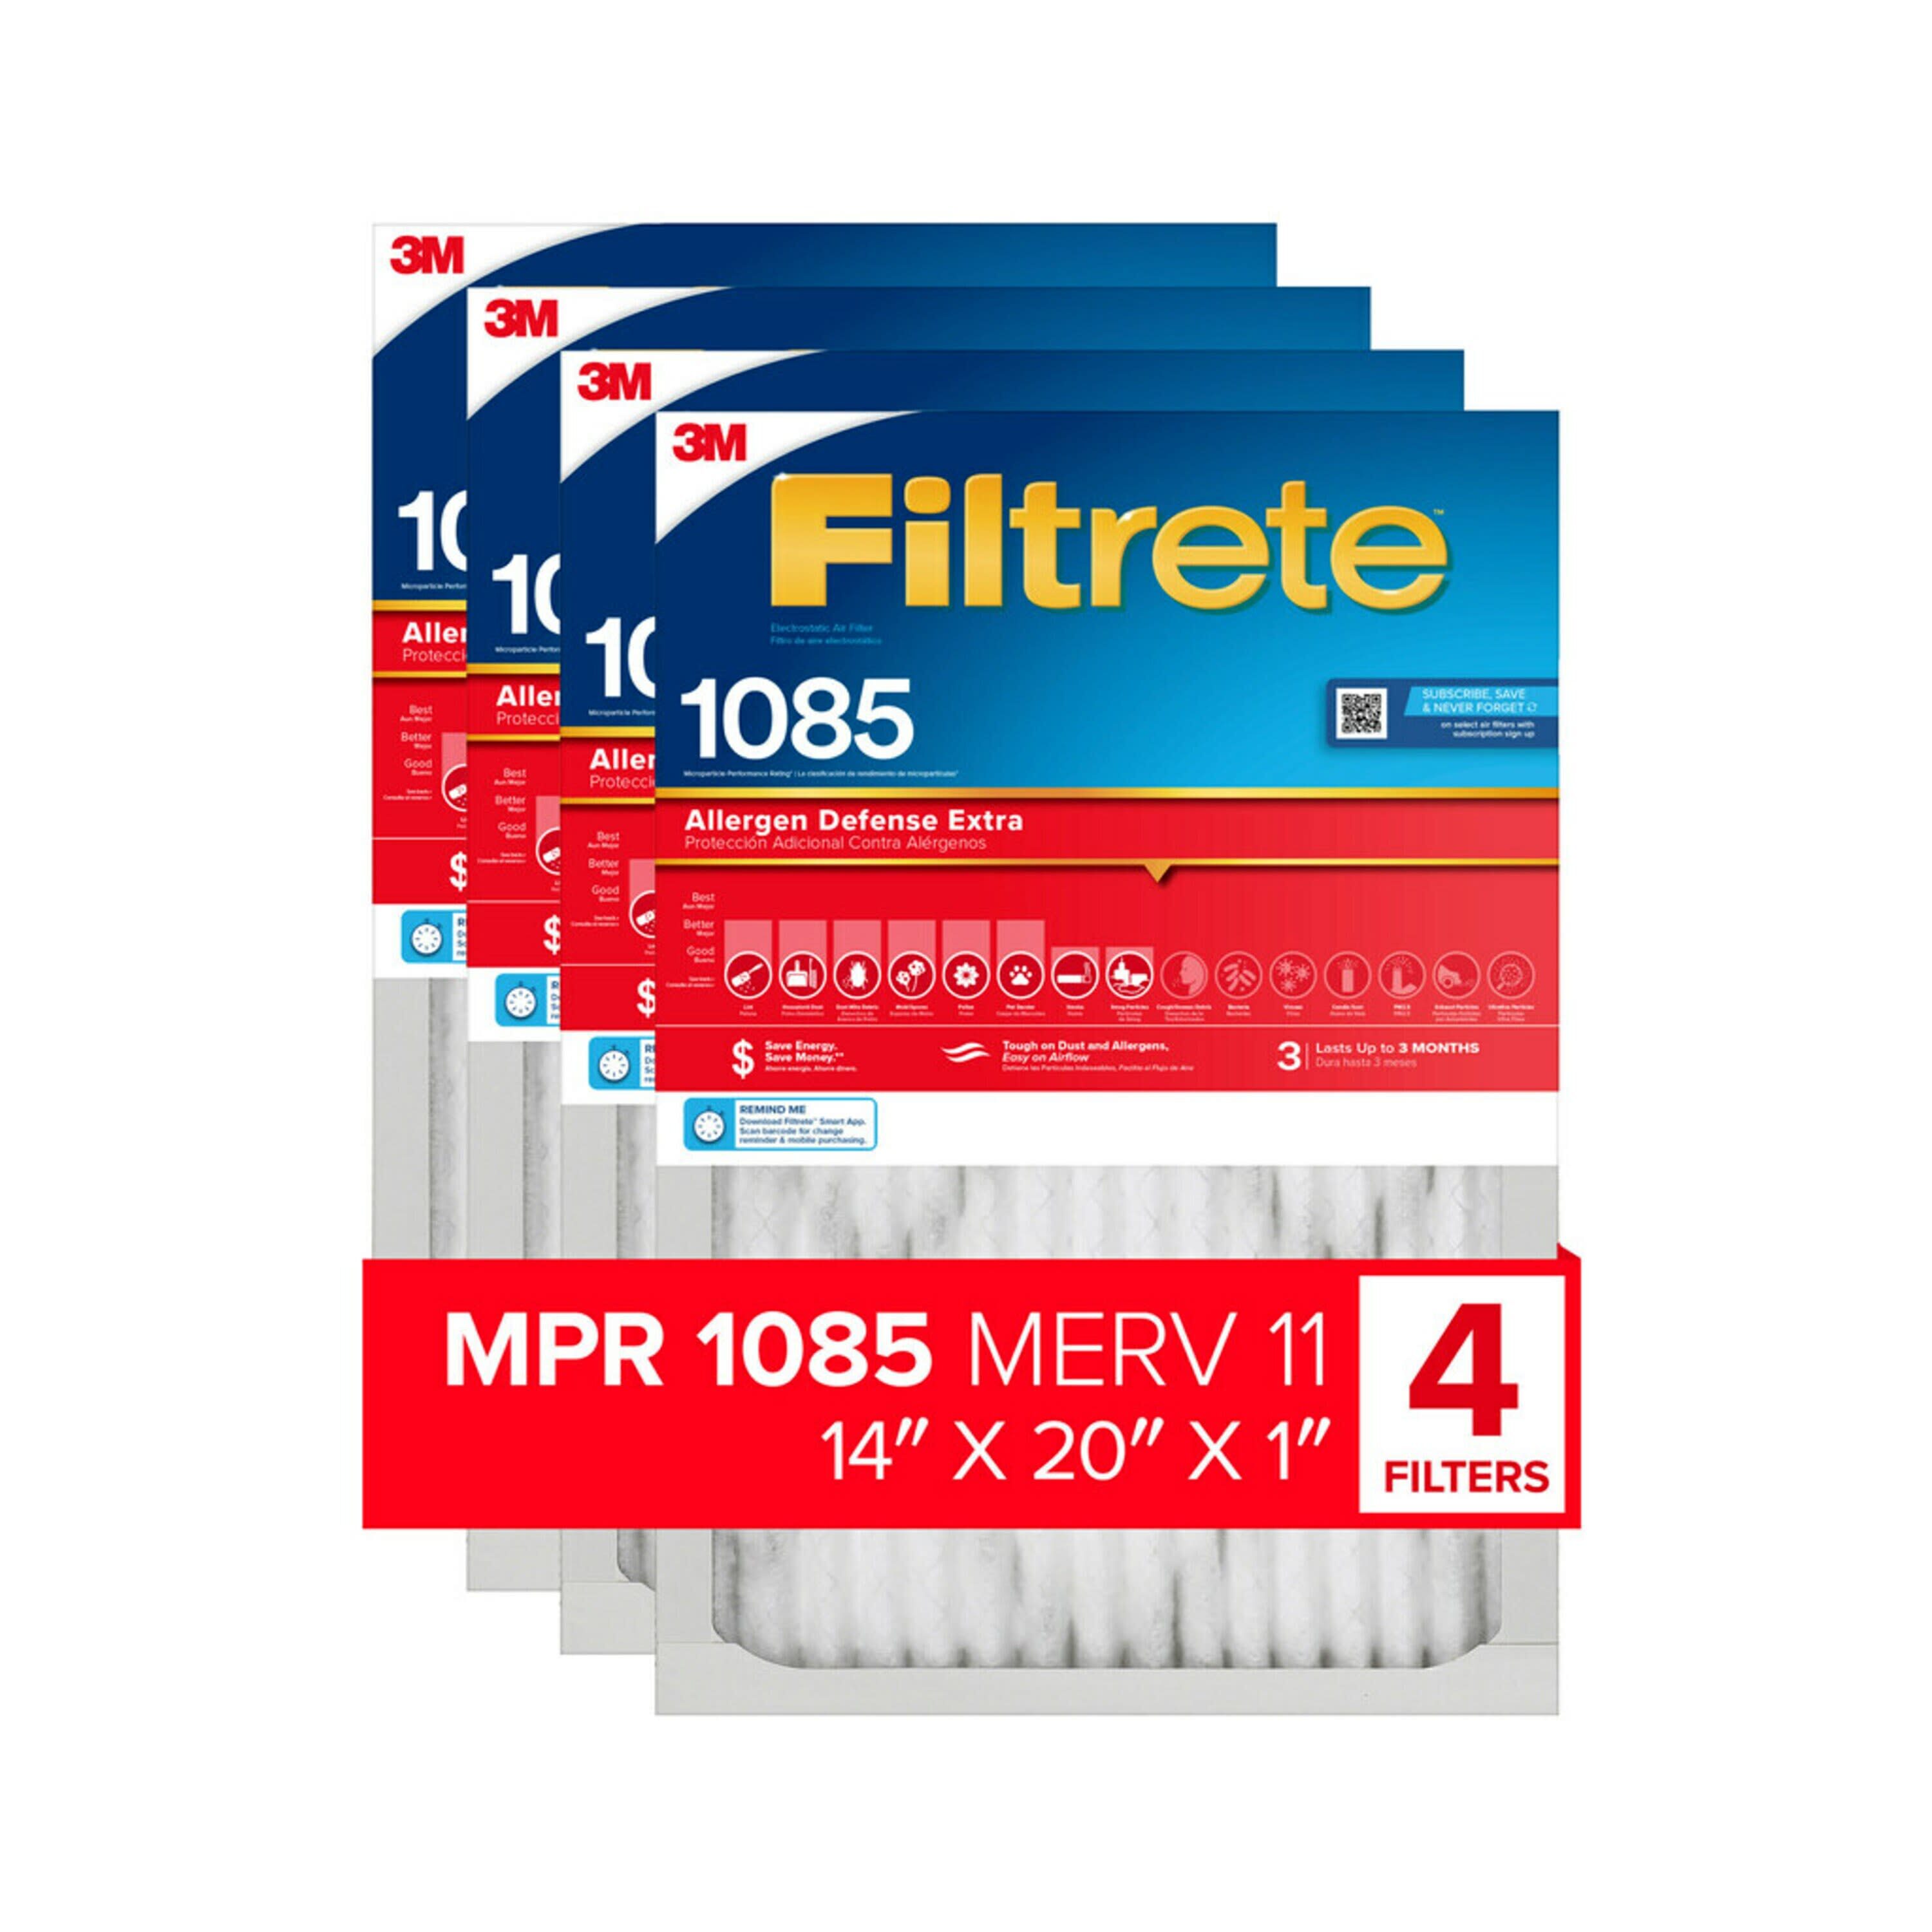 14-in W x 20-in L x 1-in 11 MERV 1085 MPR Allergen Defense Extra Electrostatic Pleated Air Filter (4-Pack) | - Filtrete 1205-4